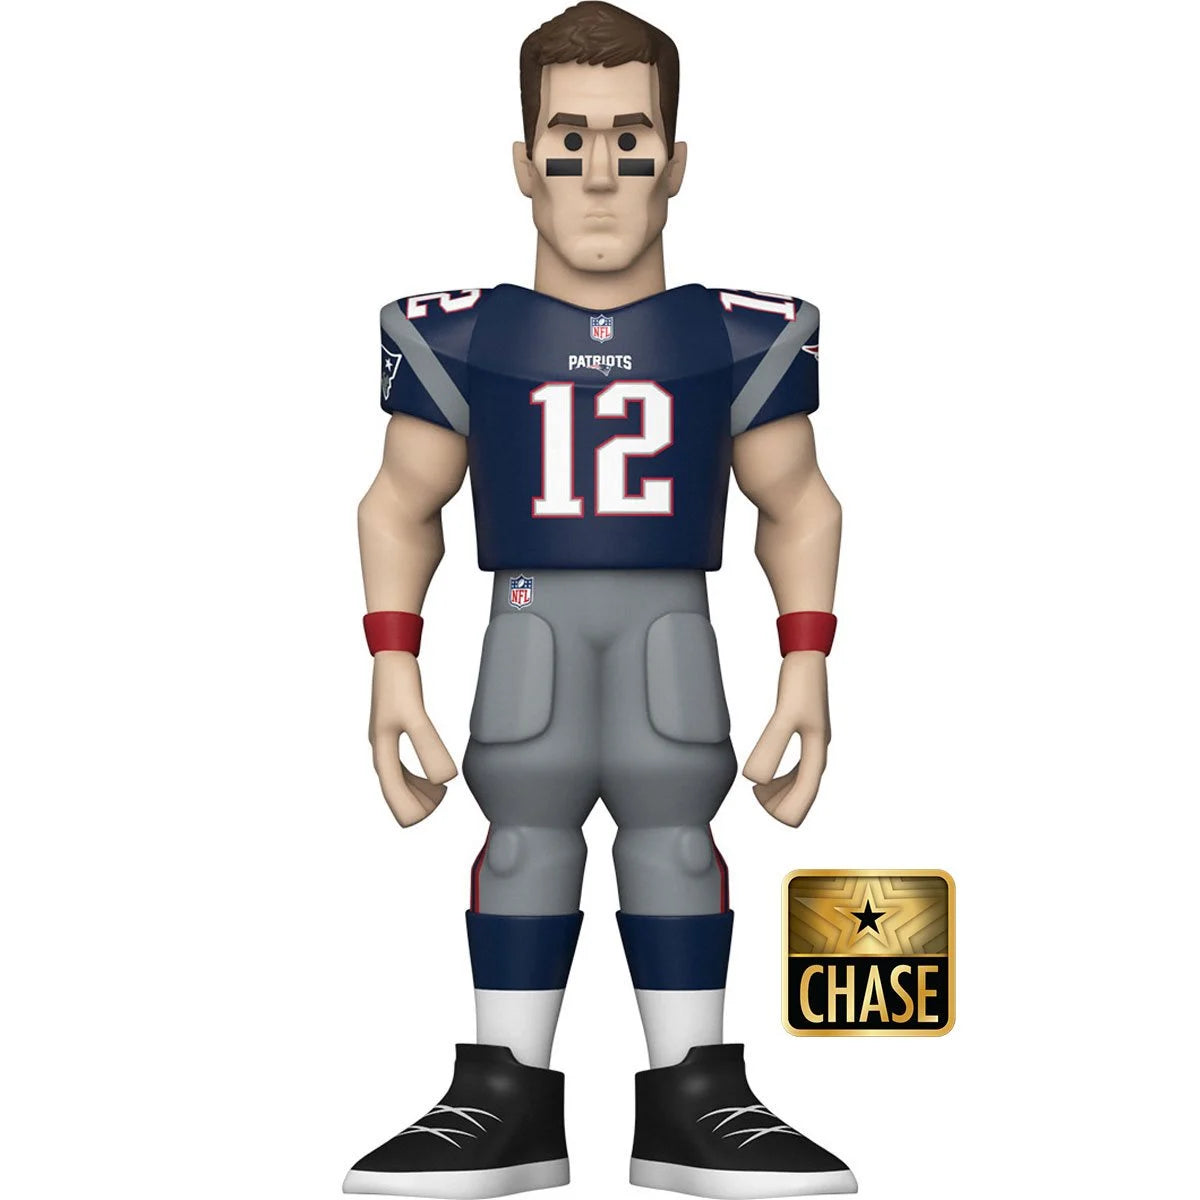 Tom Brady (Home Uniform) Buccaneers NFL 5-Inch Funko Vinyl Gold Figure w/ Chance of chase!